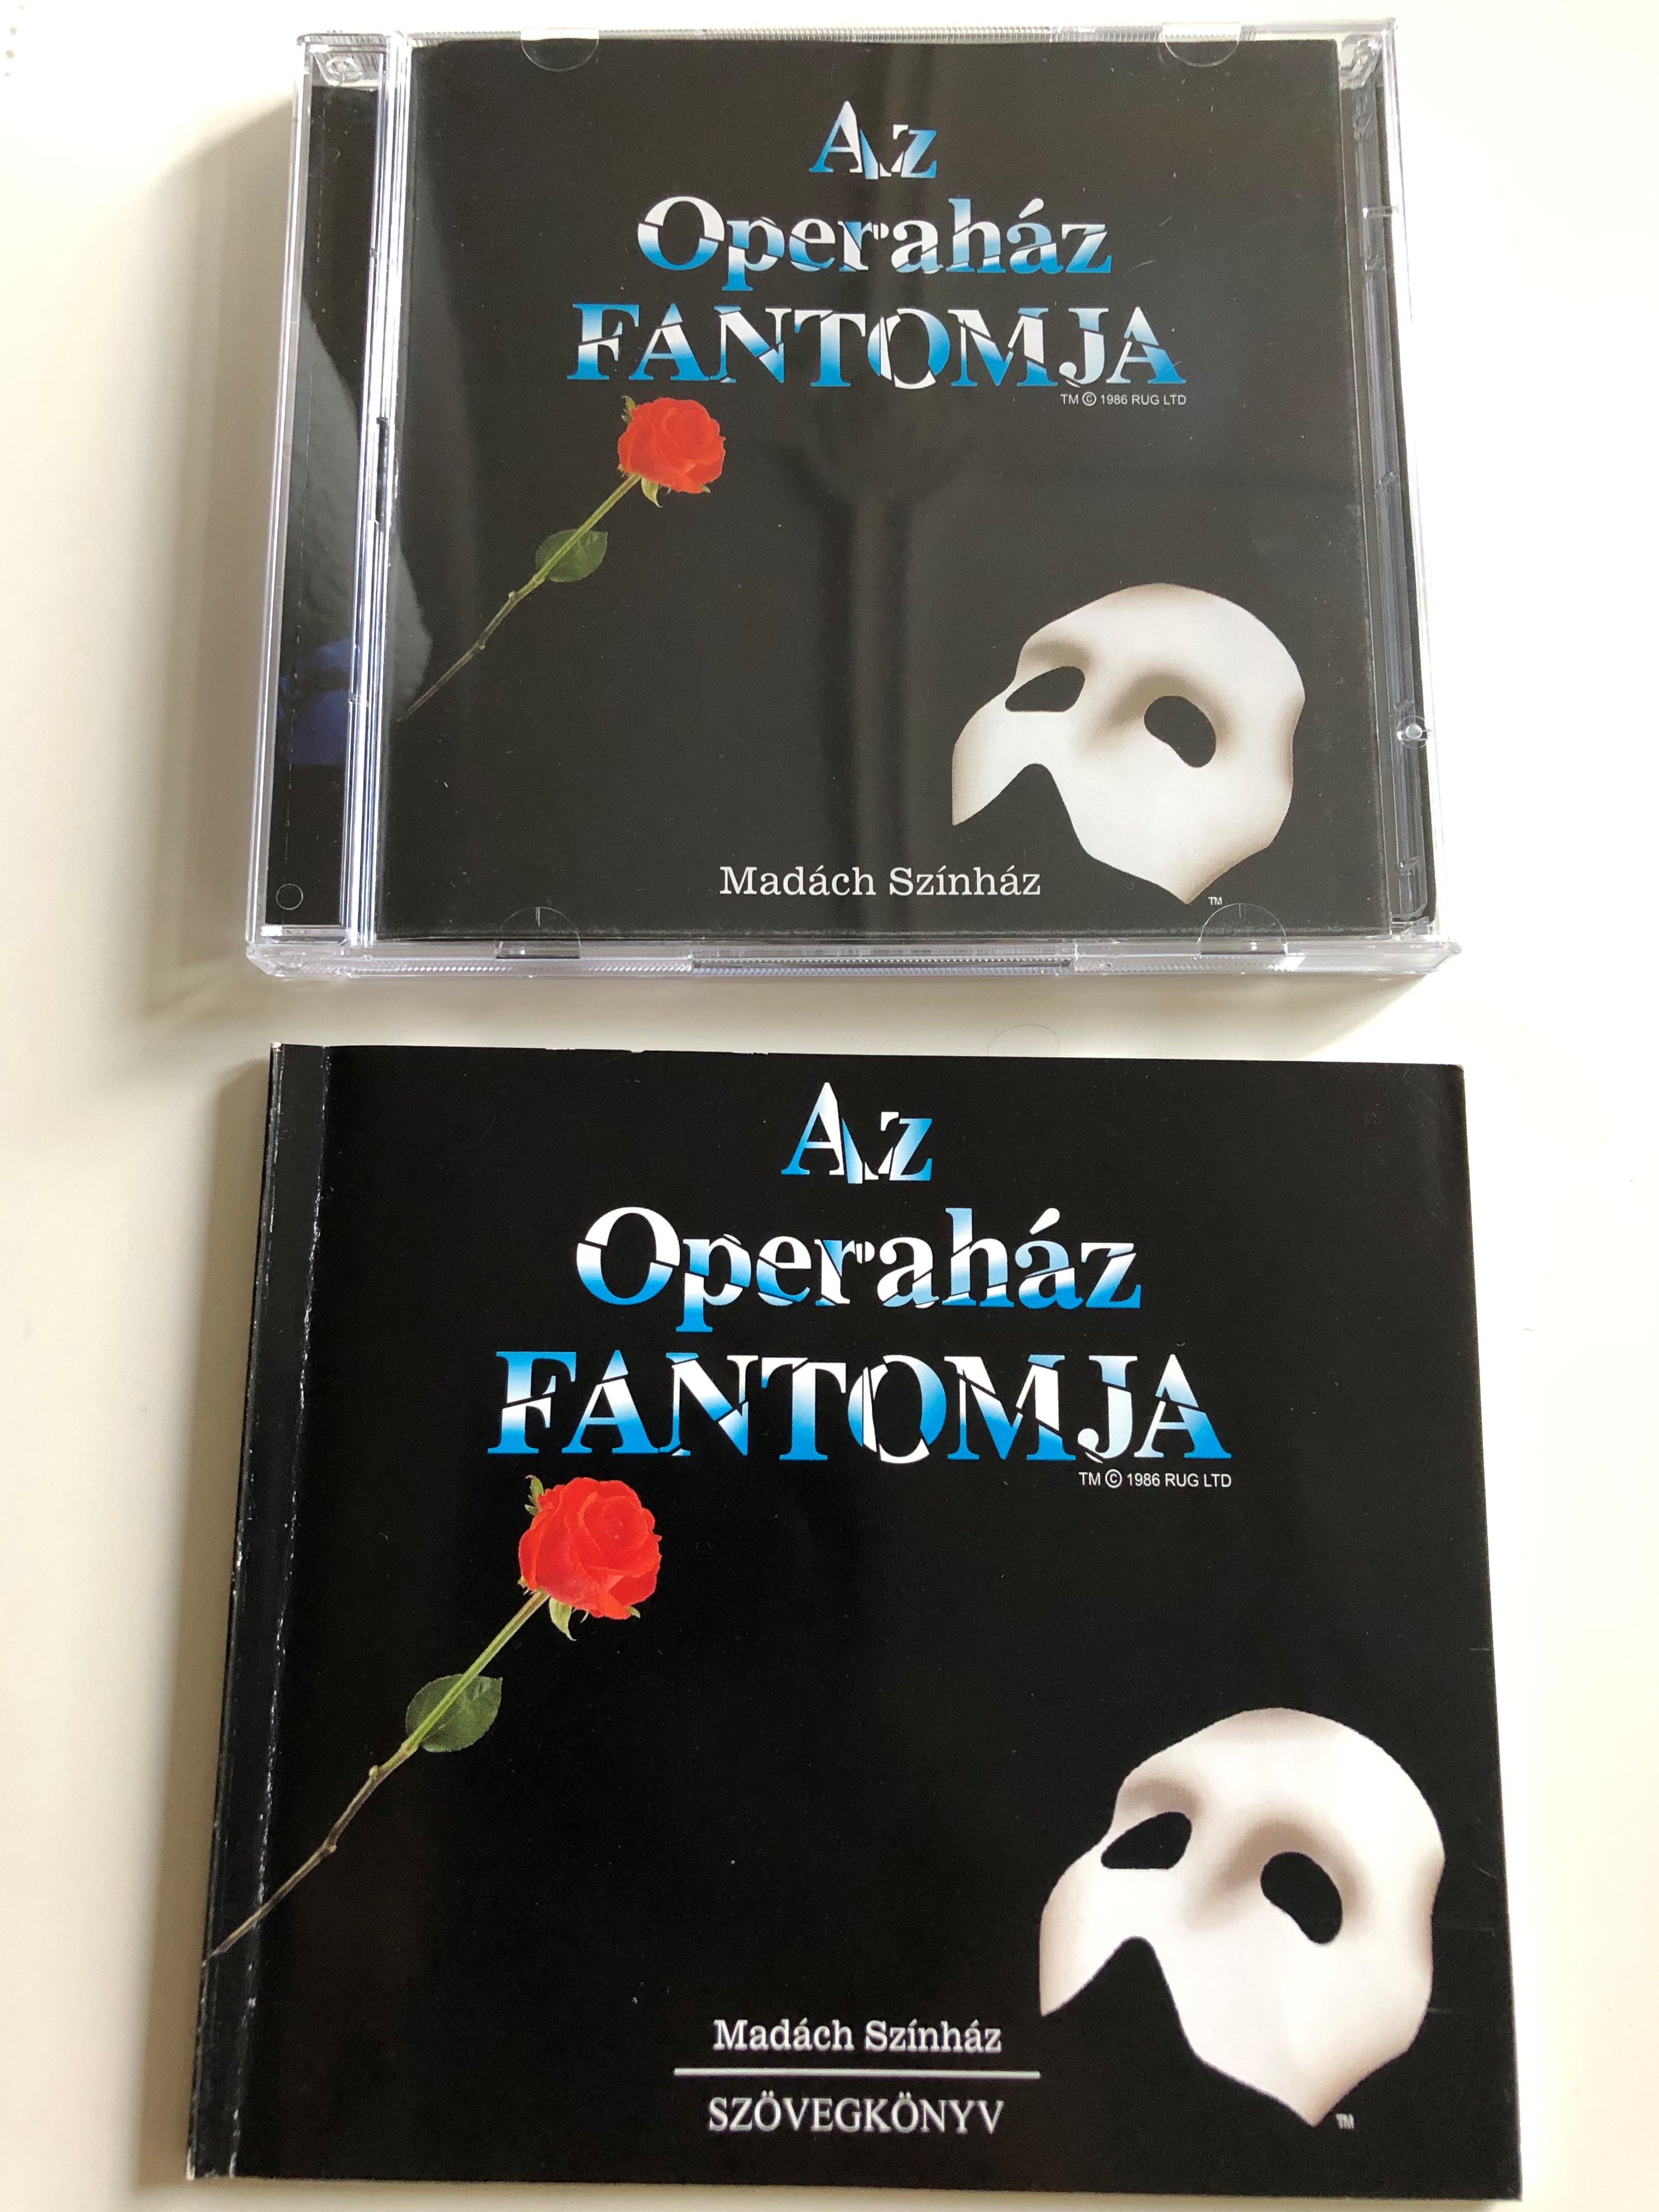 az-operah-z-fantomja-mad-ch-sz-nh-z-andrew-lloyd-webber-the-phantom-of-the-opera-charles-hart-directed-by-szirtes-tam-s-2x-audio-cd-2003-11-.jpg